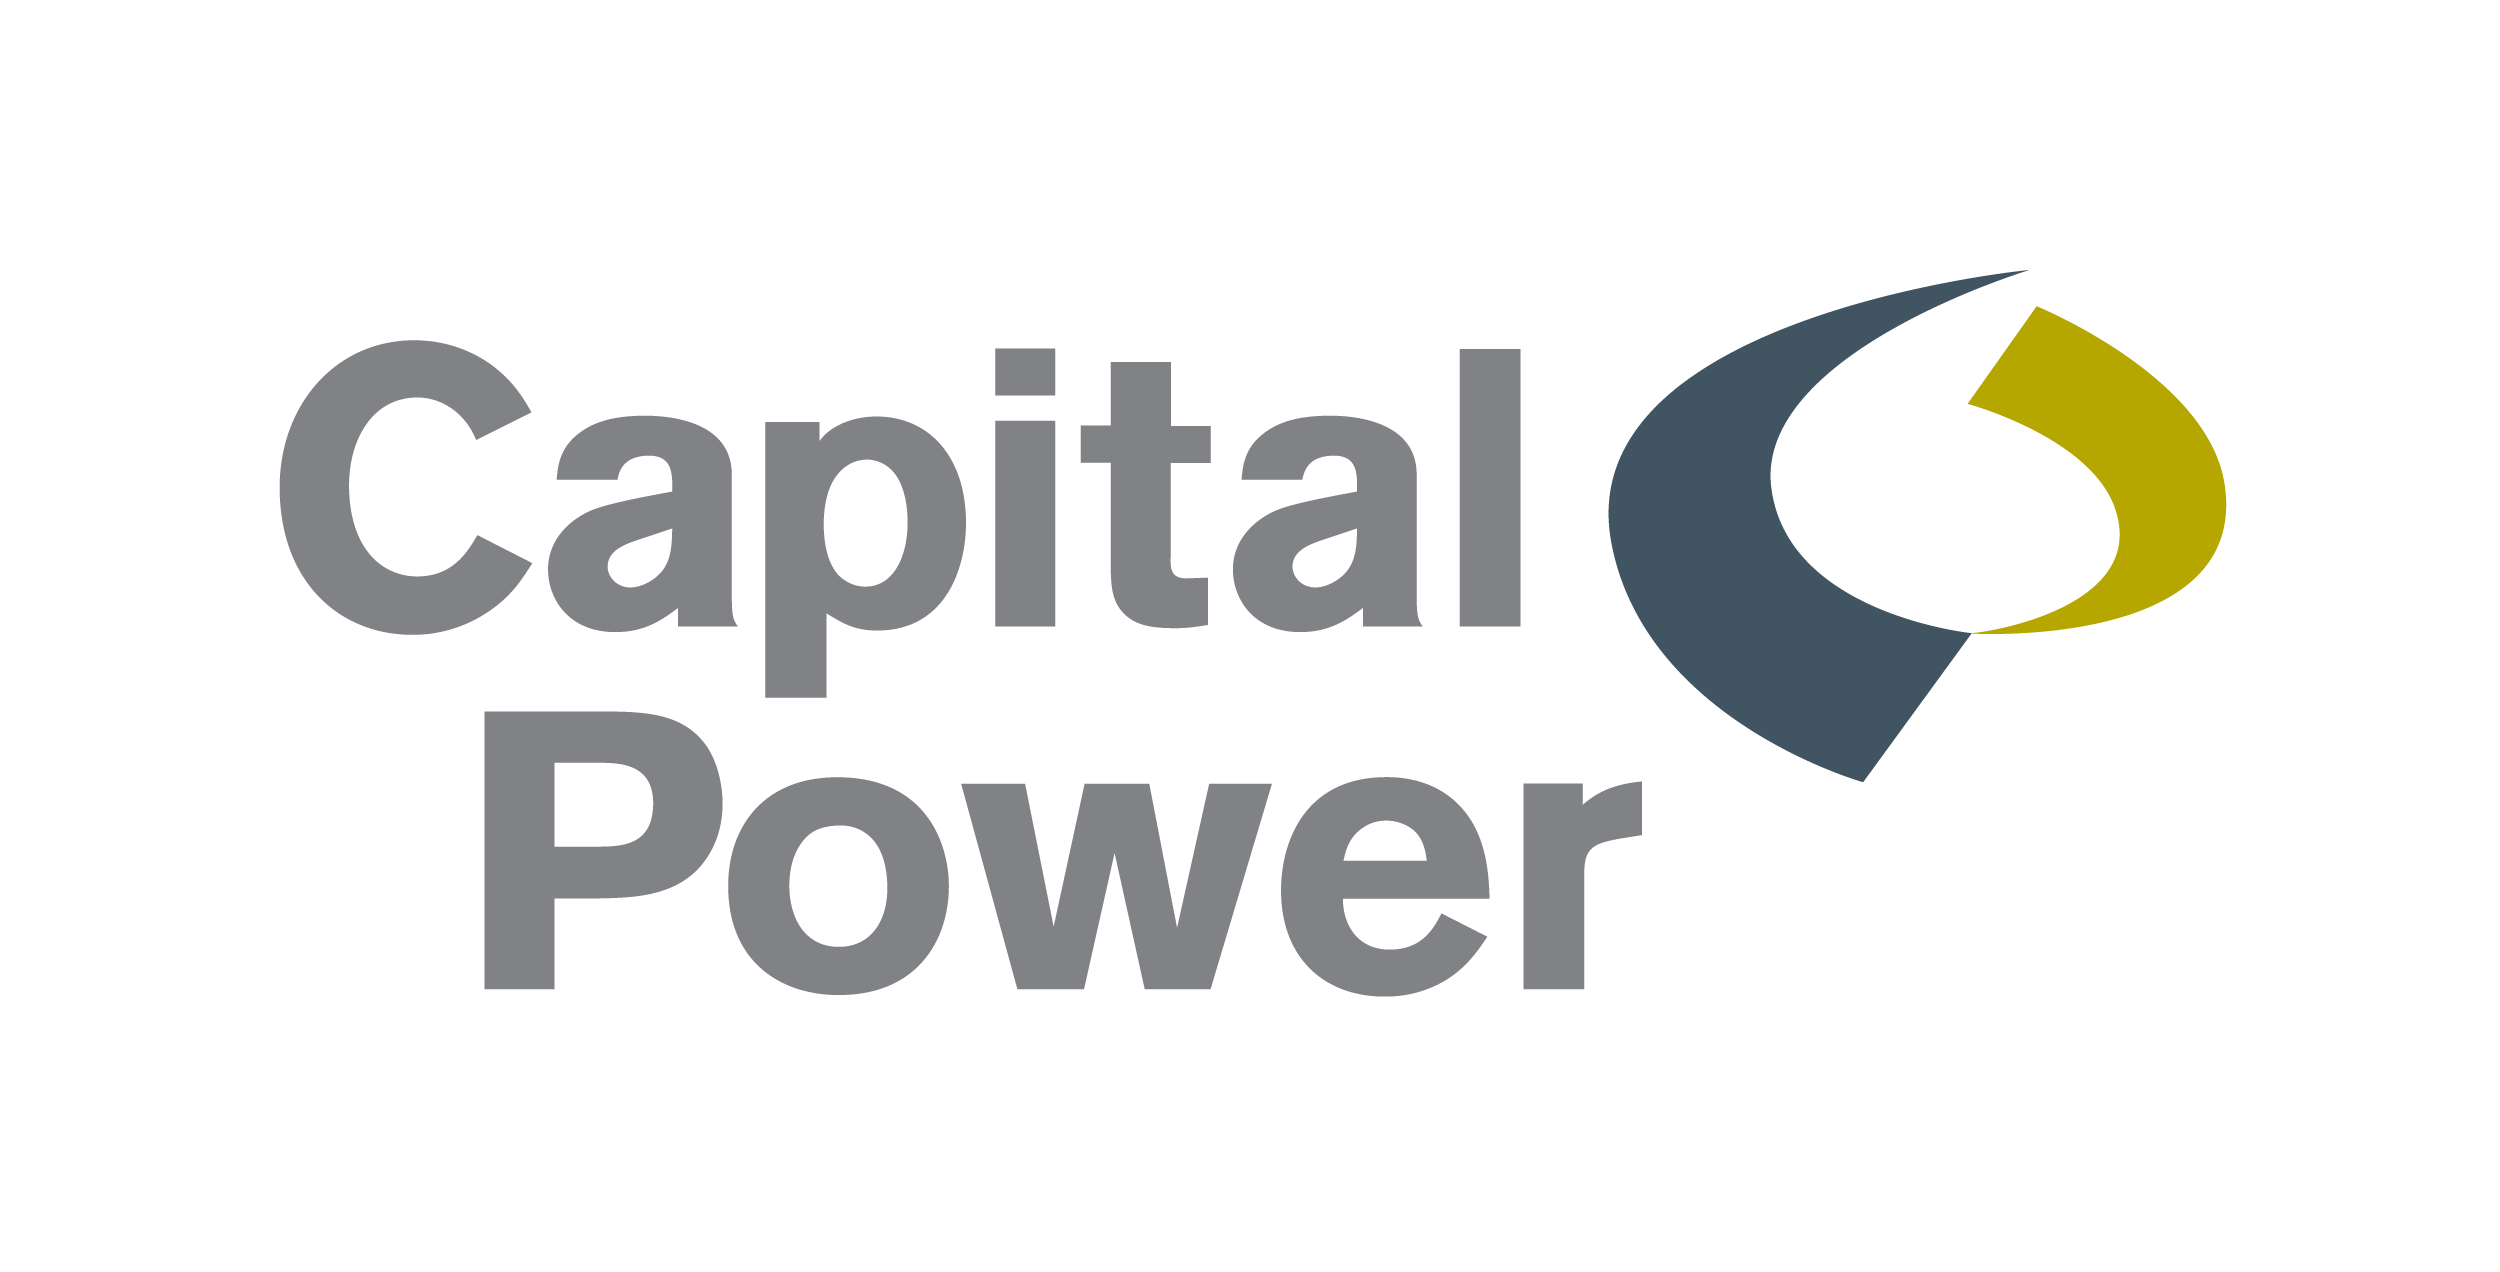 Capital Power CMYK logo 2500x1200 - transparent bg 2